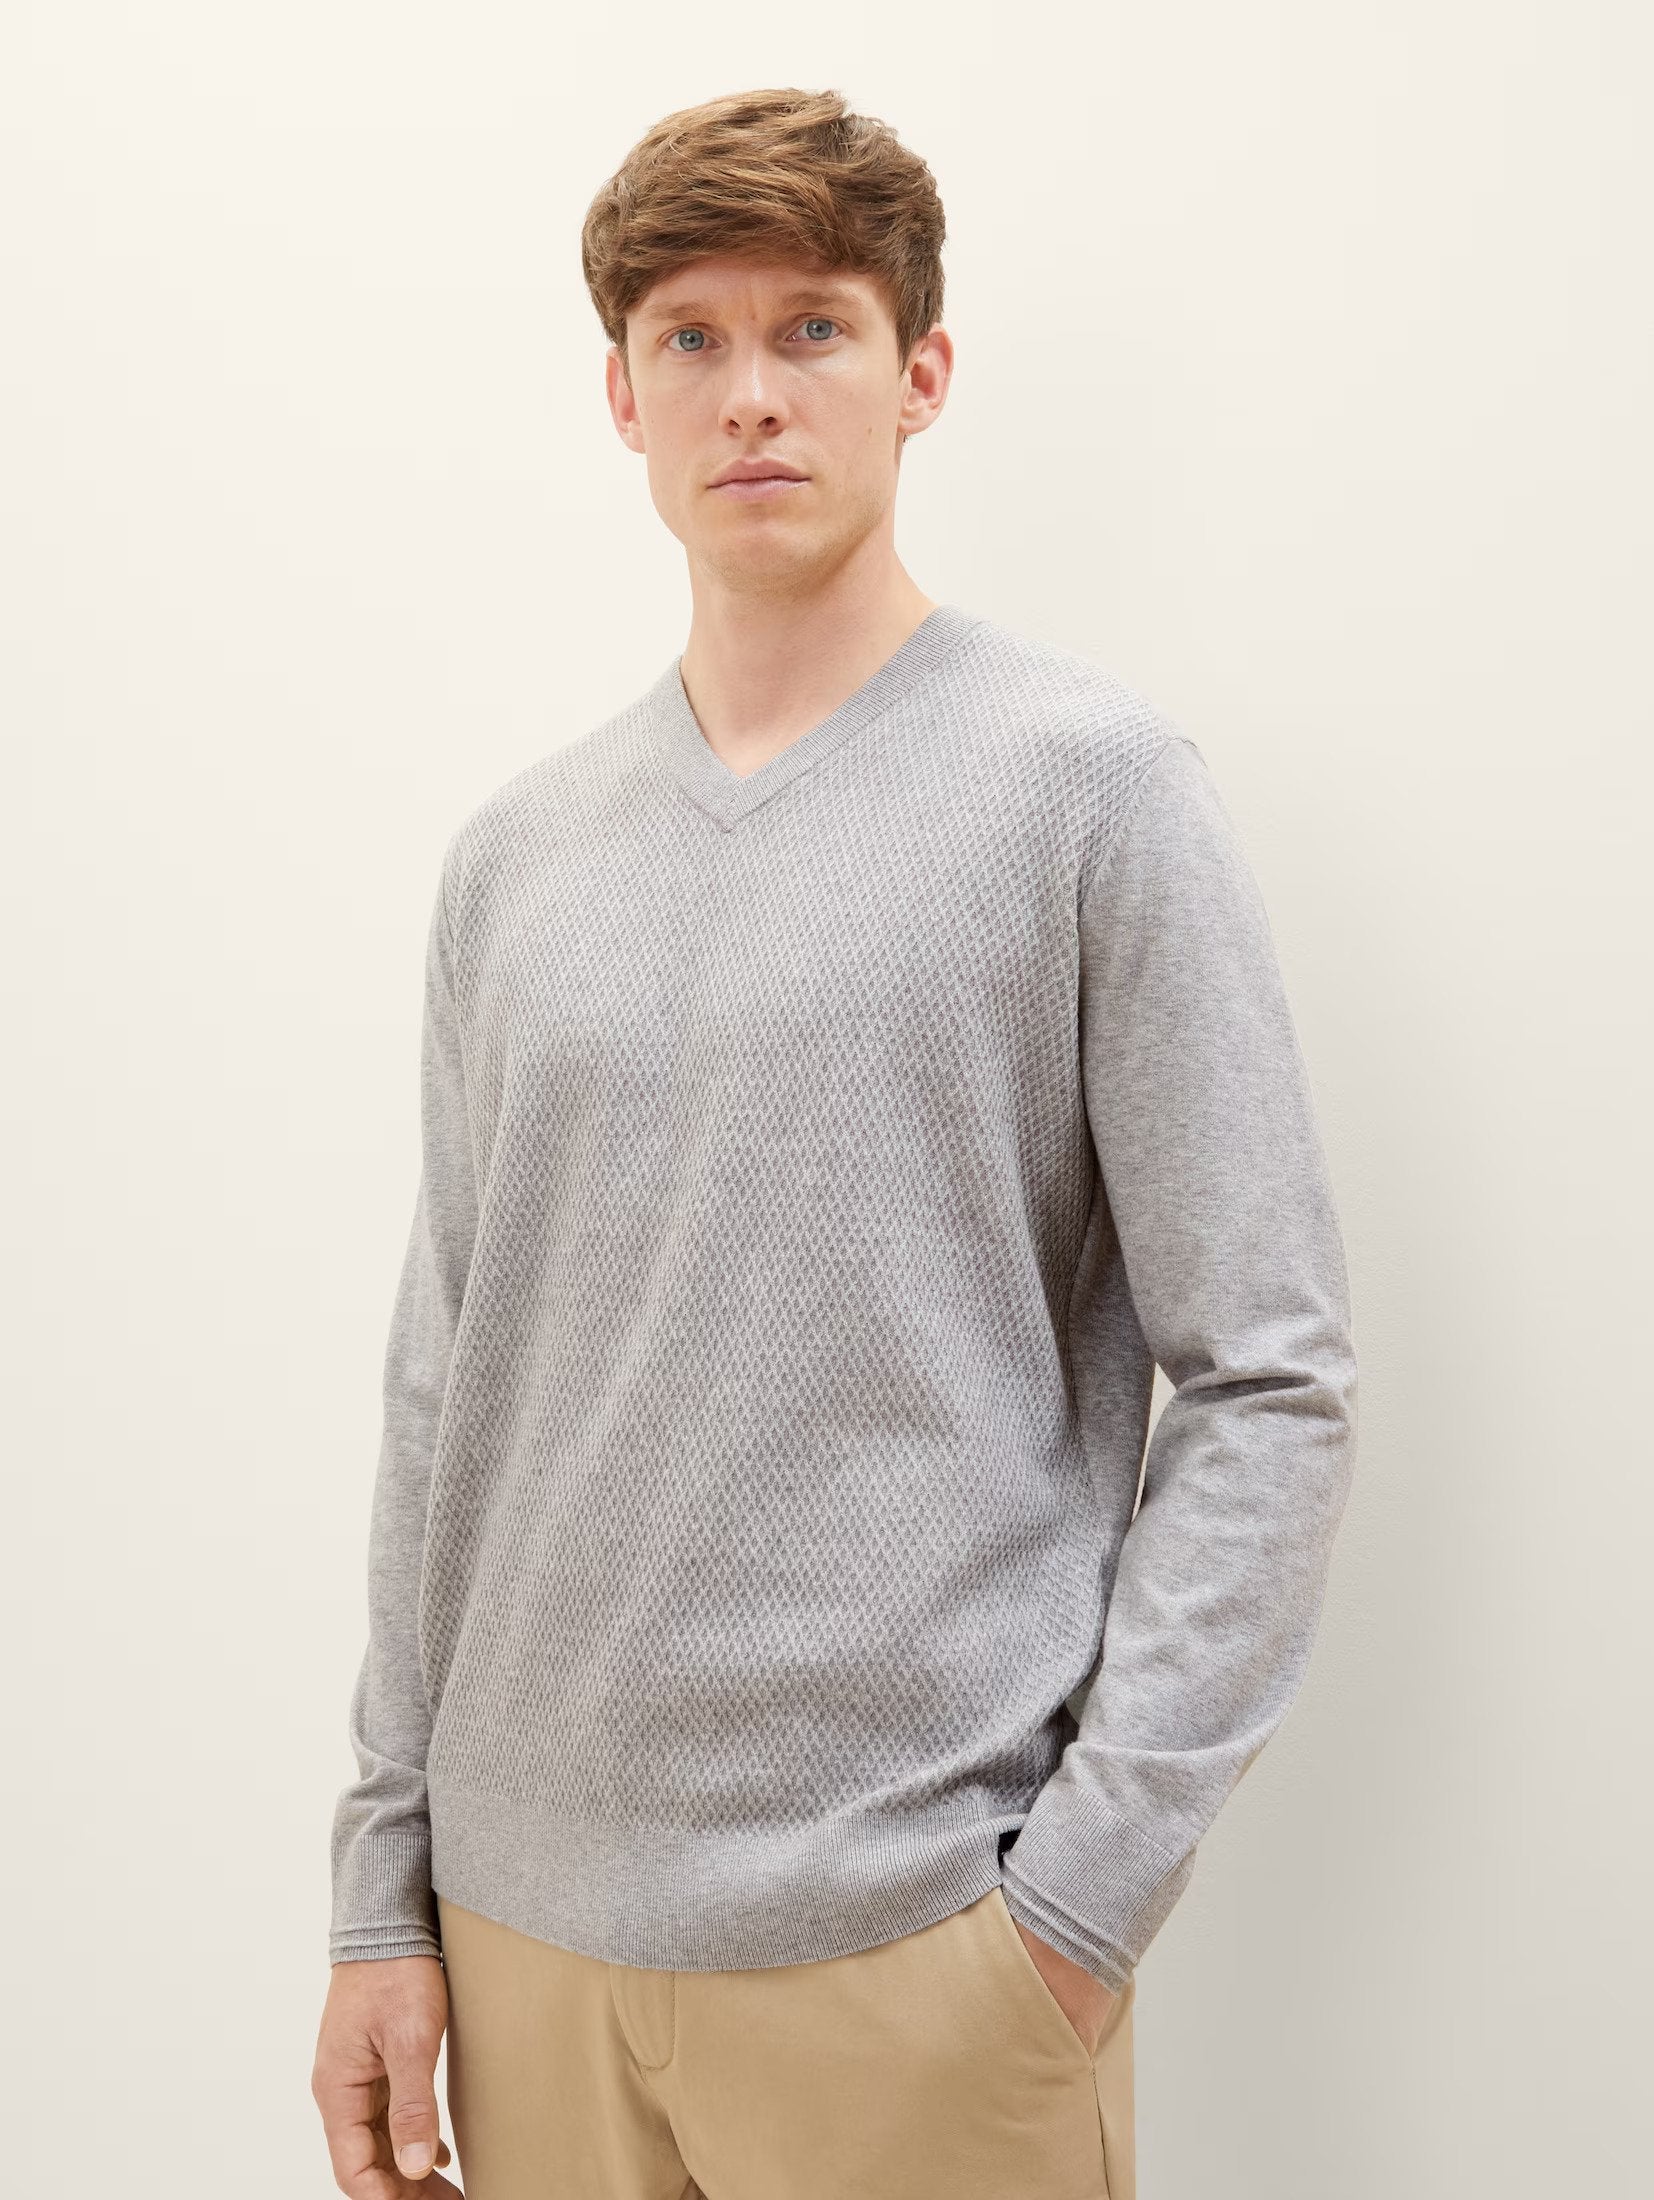 Tom Tailor Grey Knitted V-Neck Sweater